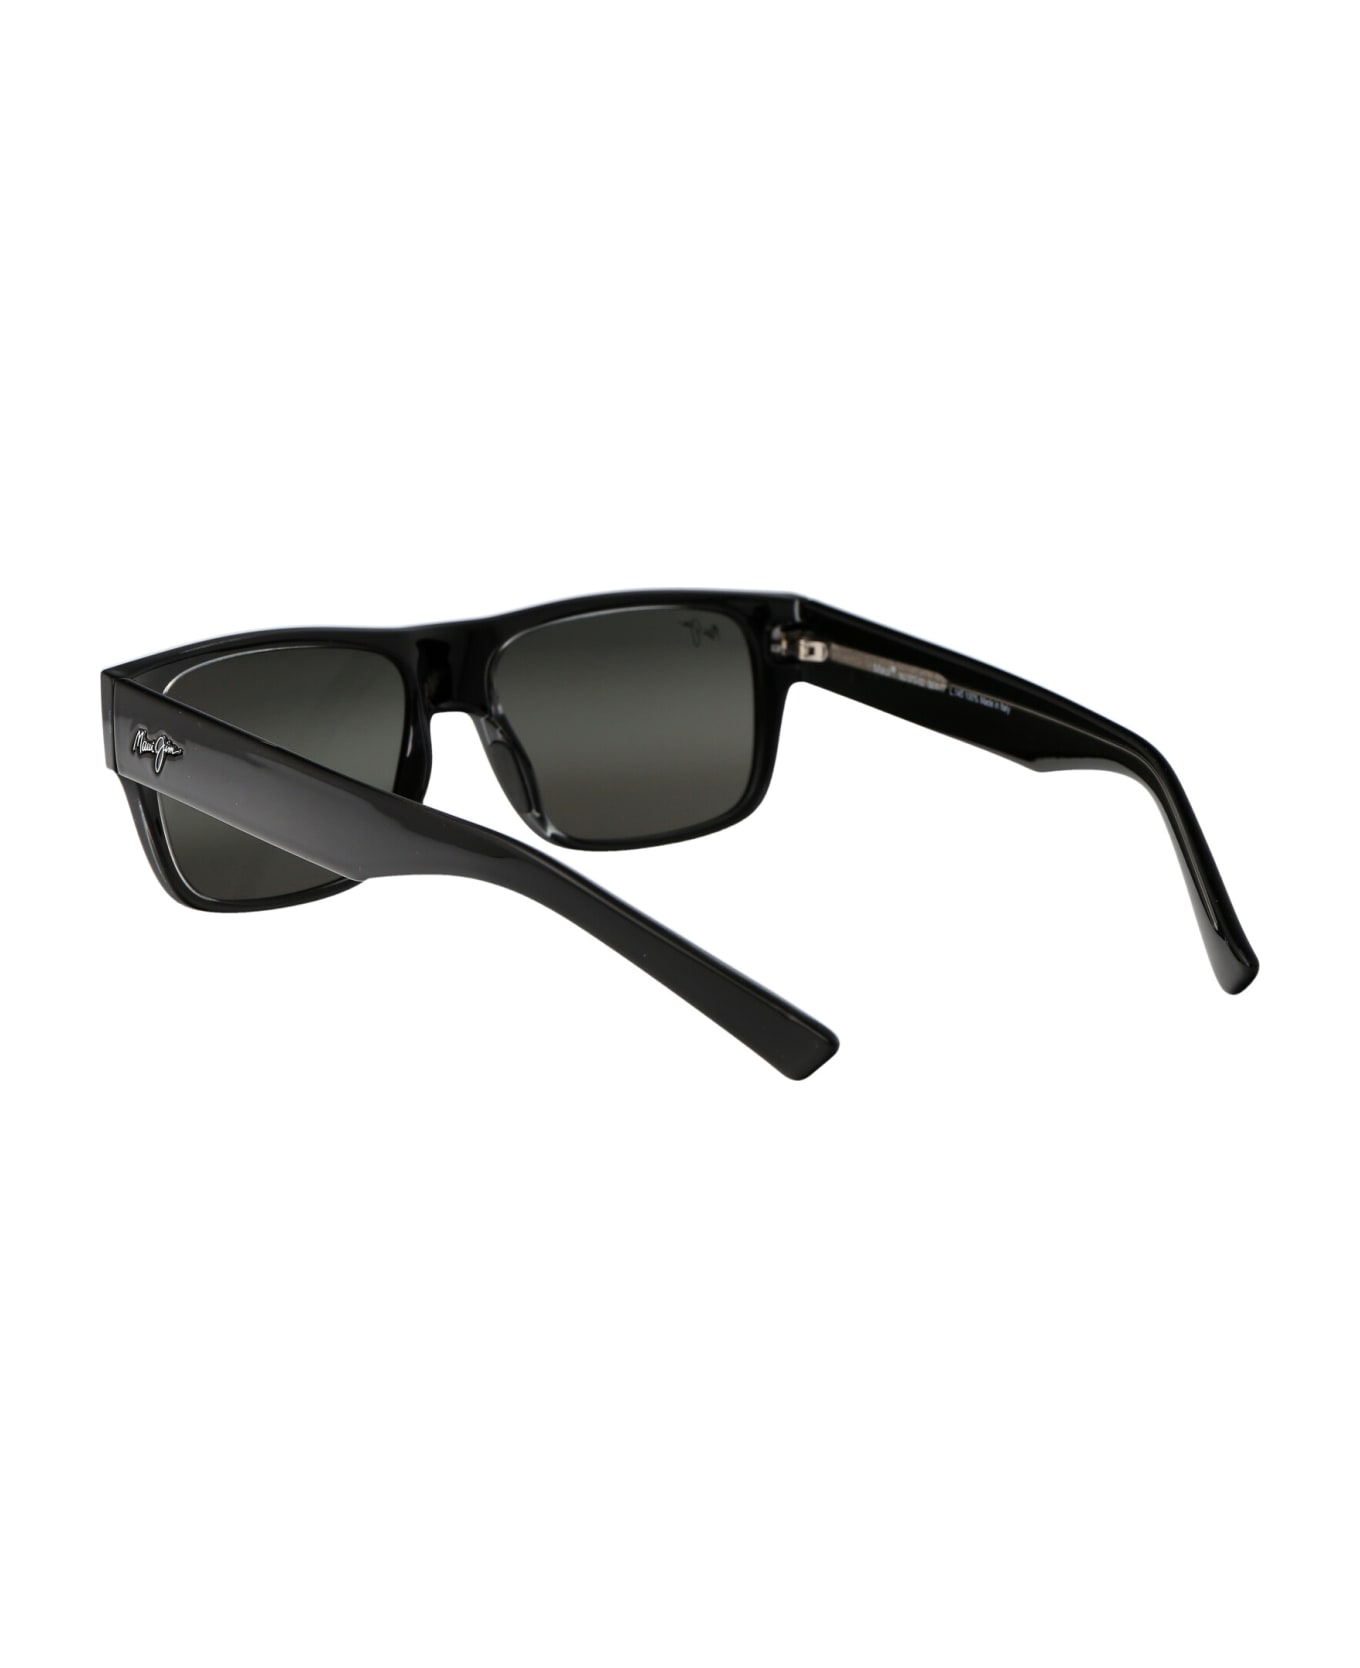 Maui Jim Keahi Sunglasses - 02 GREY BLACK GLOSS